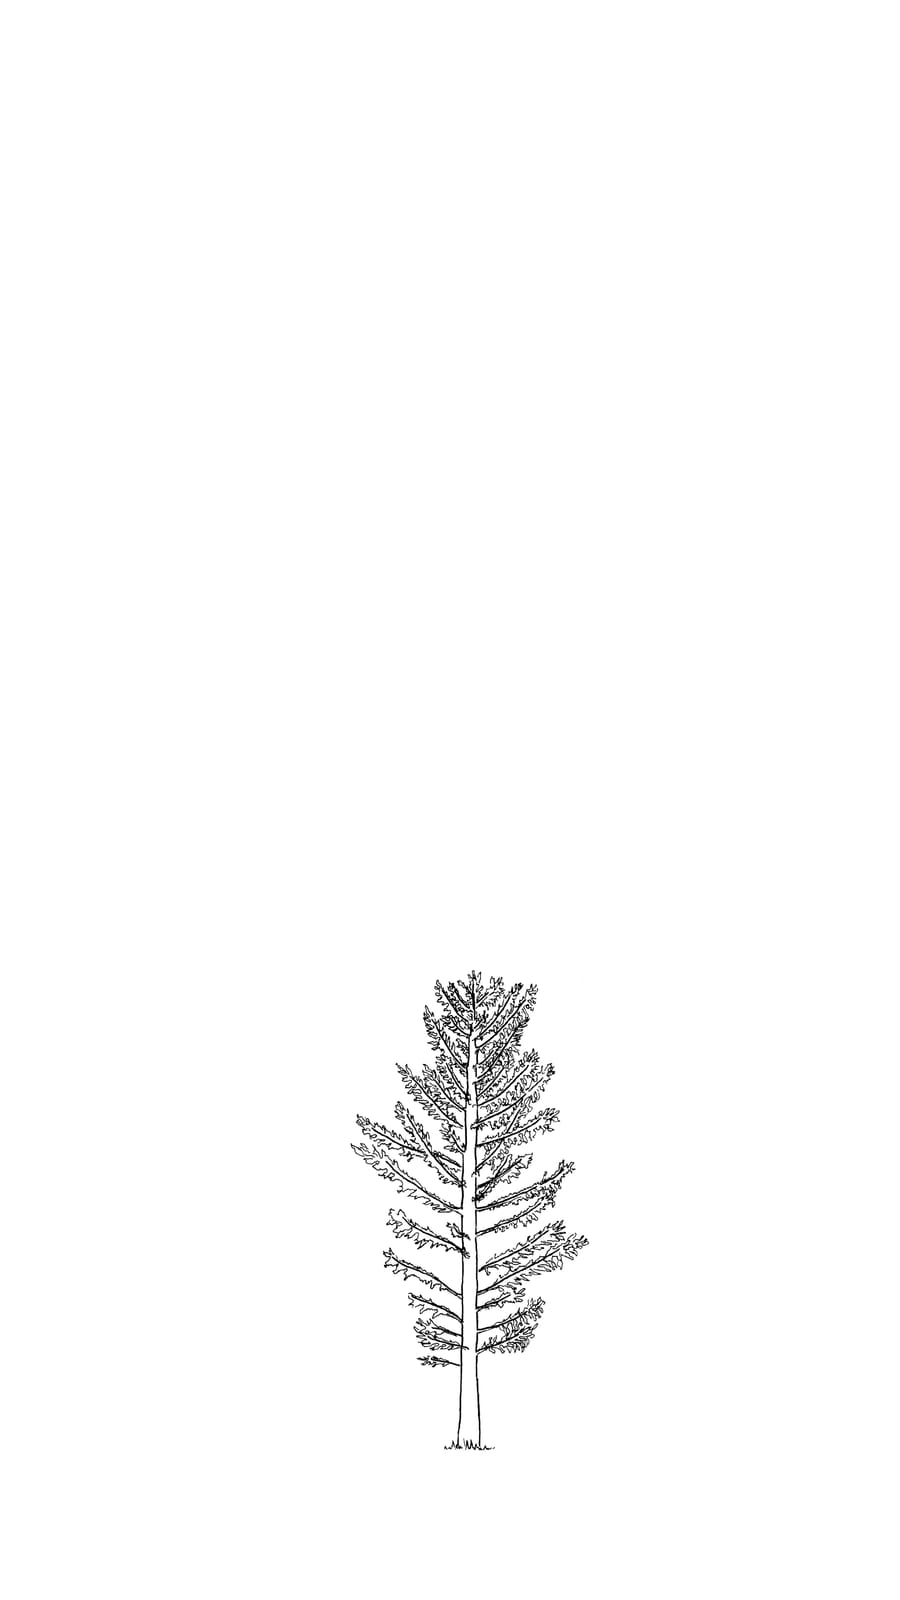 Black line sketch of a 10 year old douglas fir tree